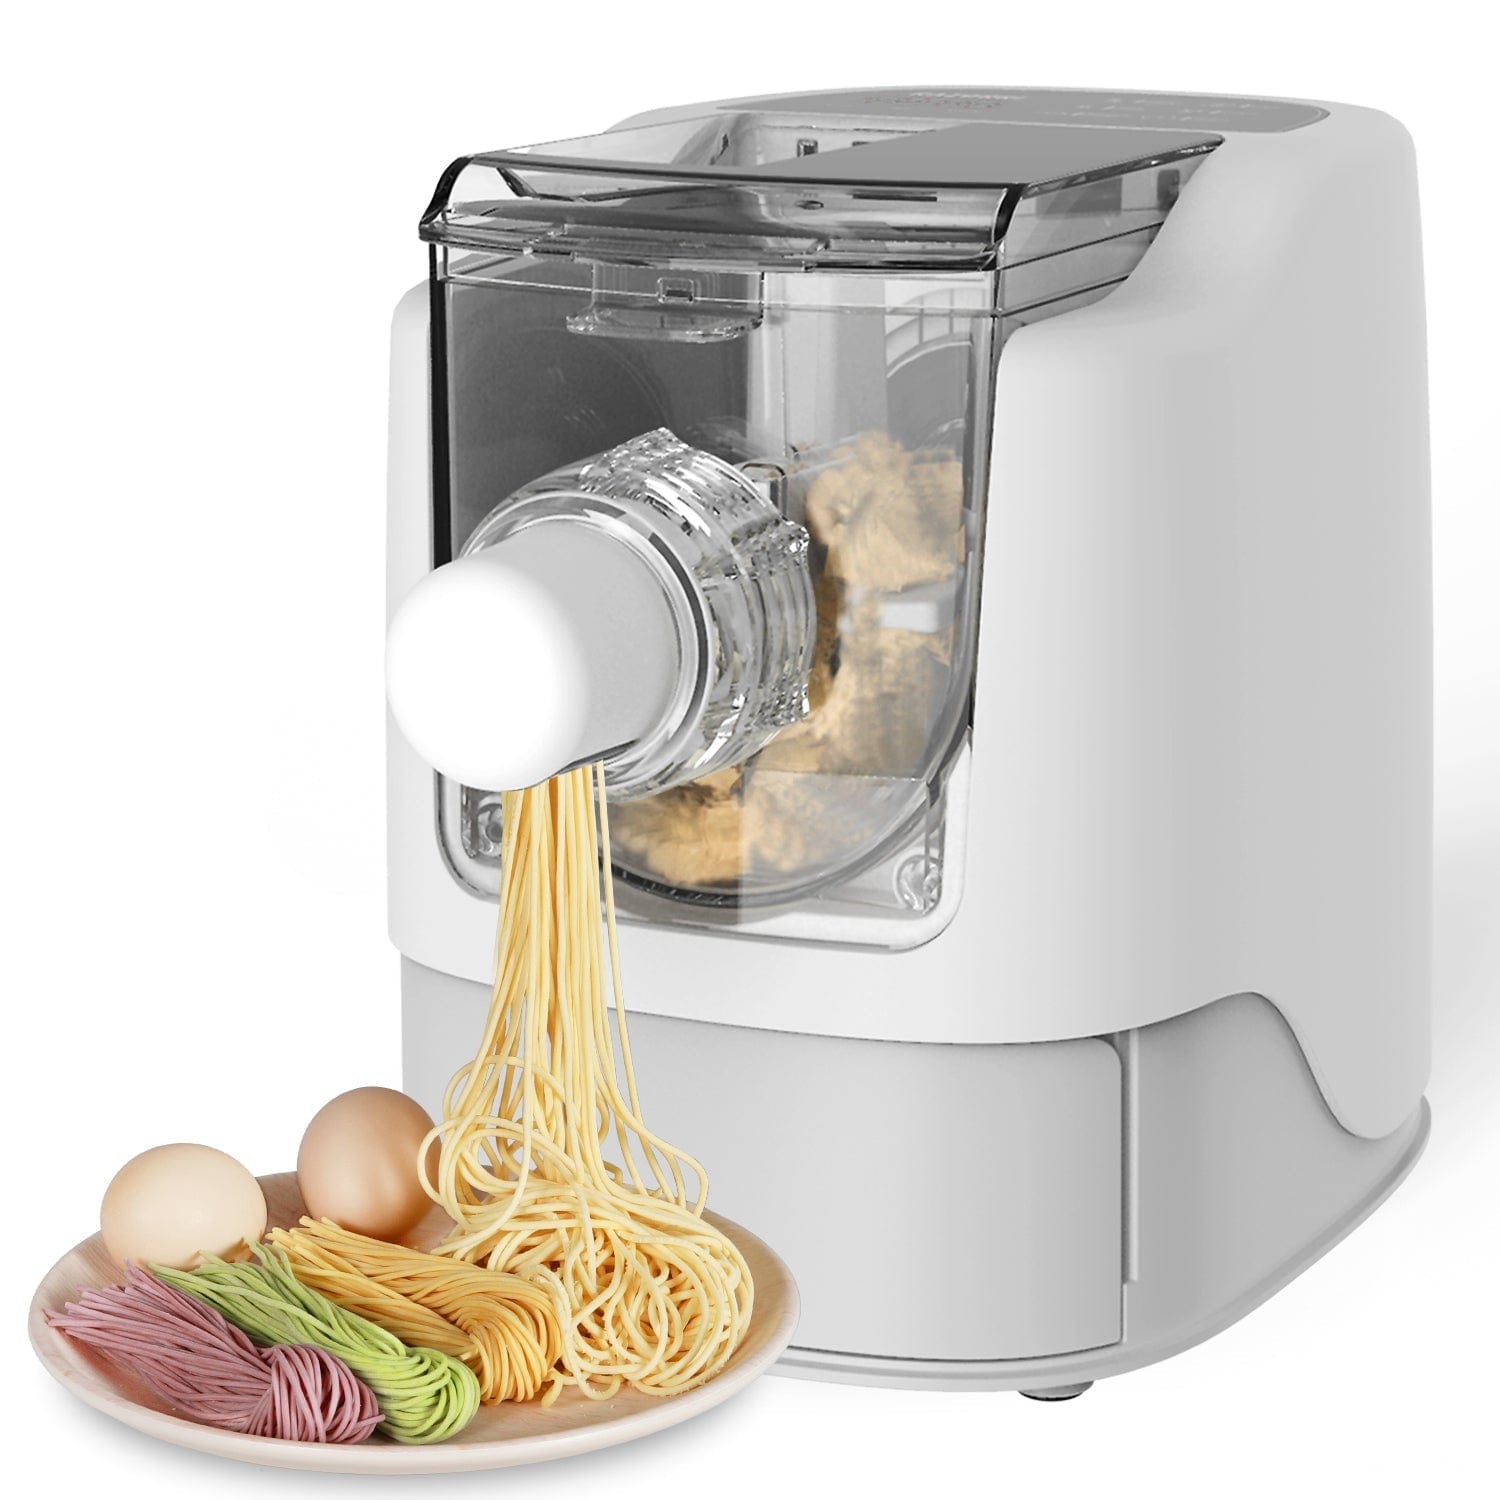 Cheap Electric automatic noodle press machine with 13 grain mold vegetable  noodles dumpling maker pasta spaghetti cutter dough blender